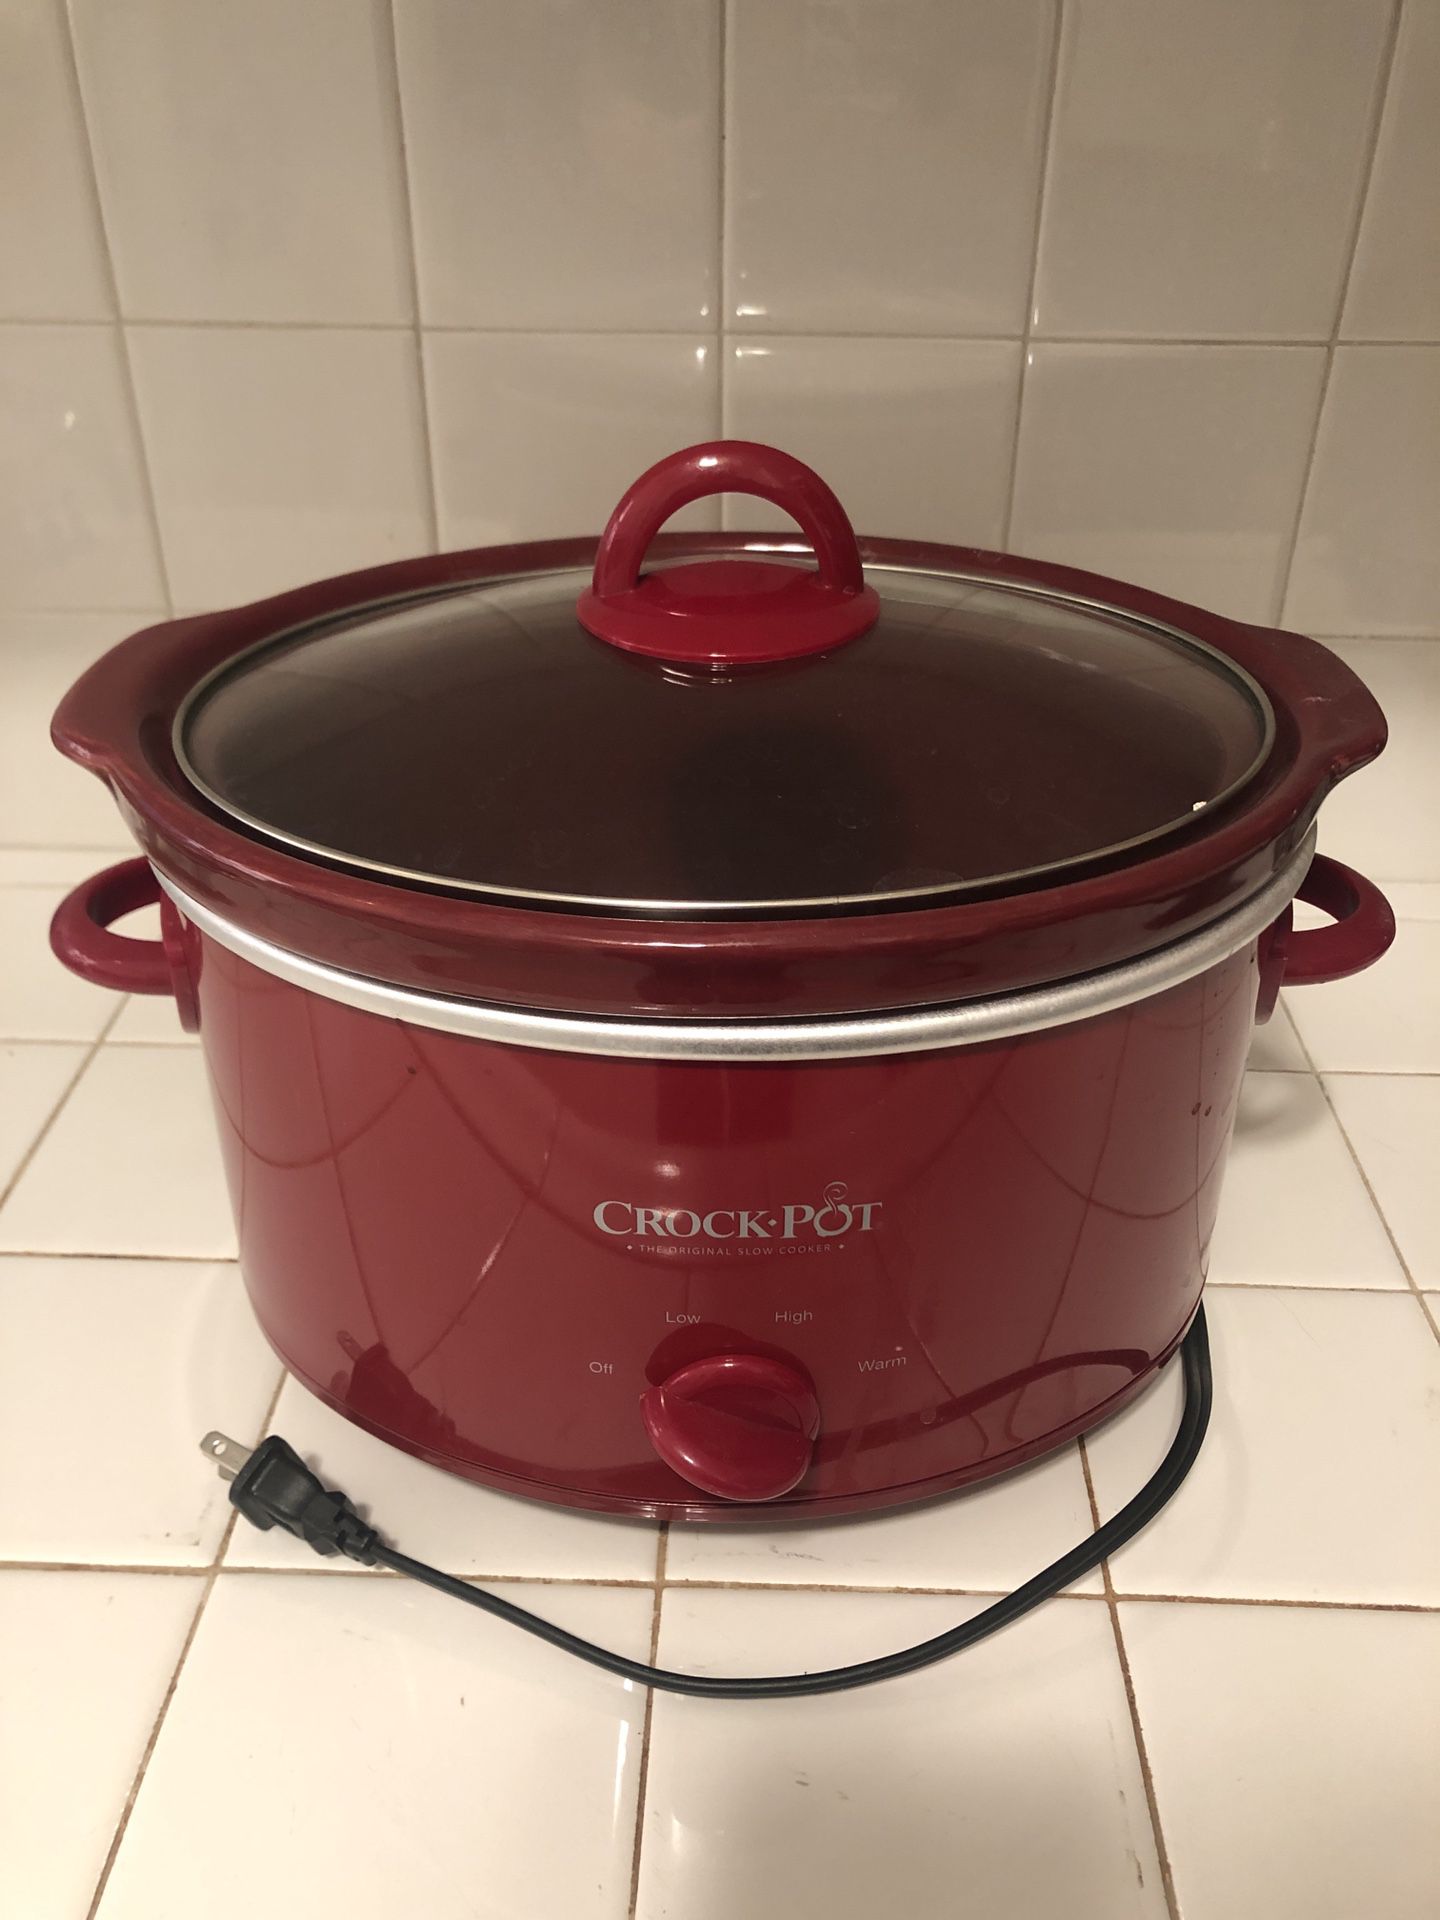 Crock pot red slow cooker